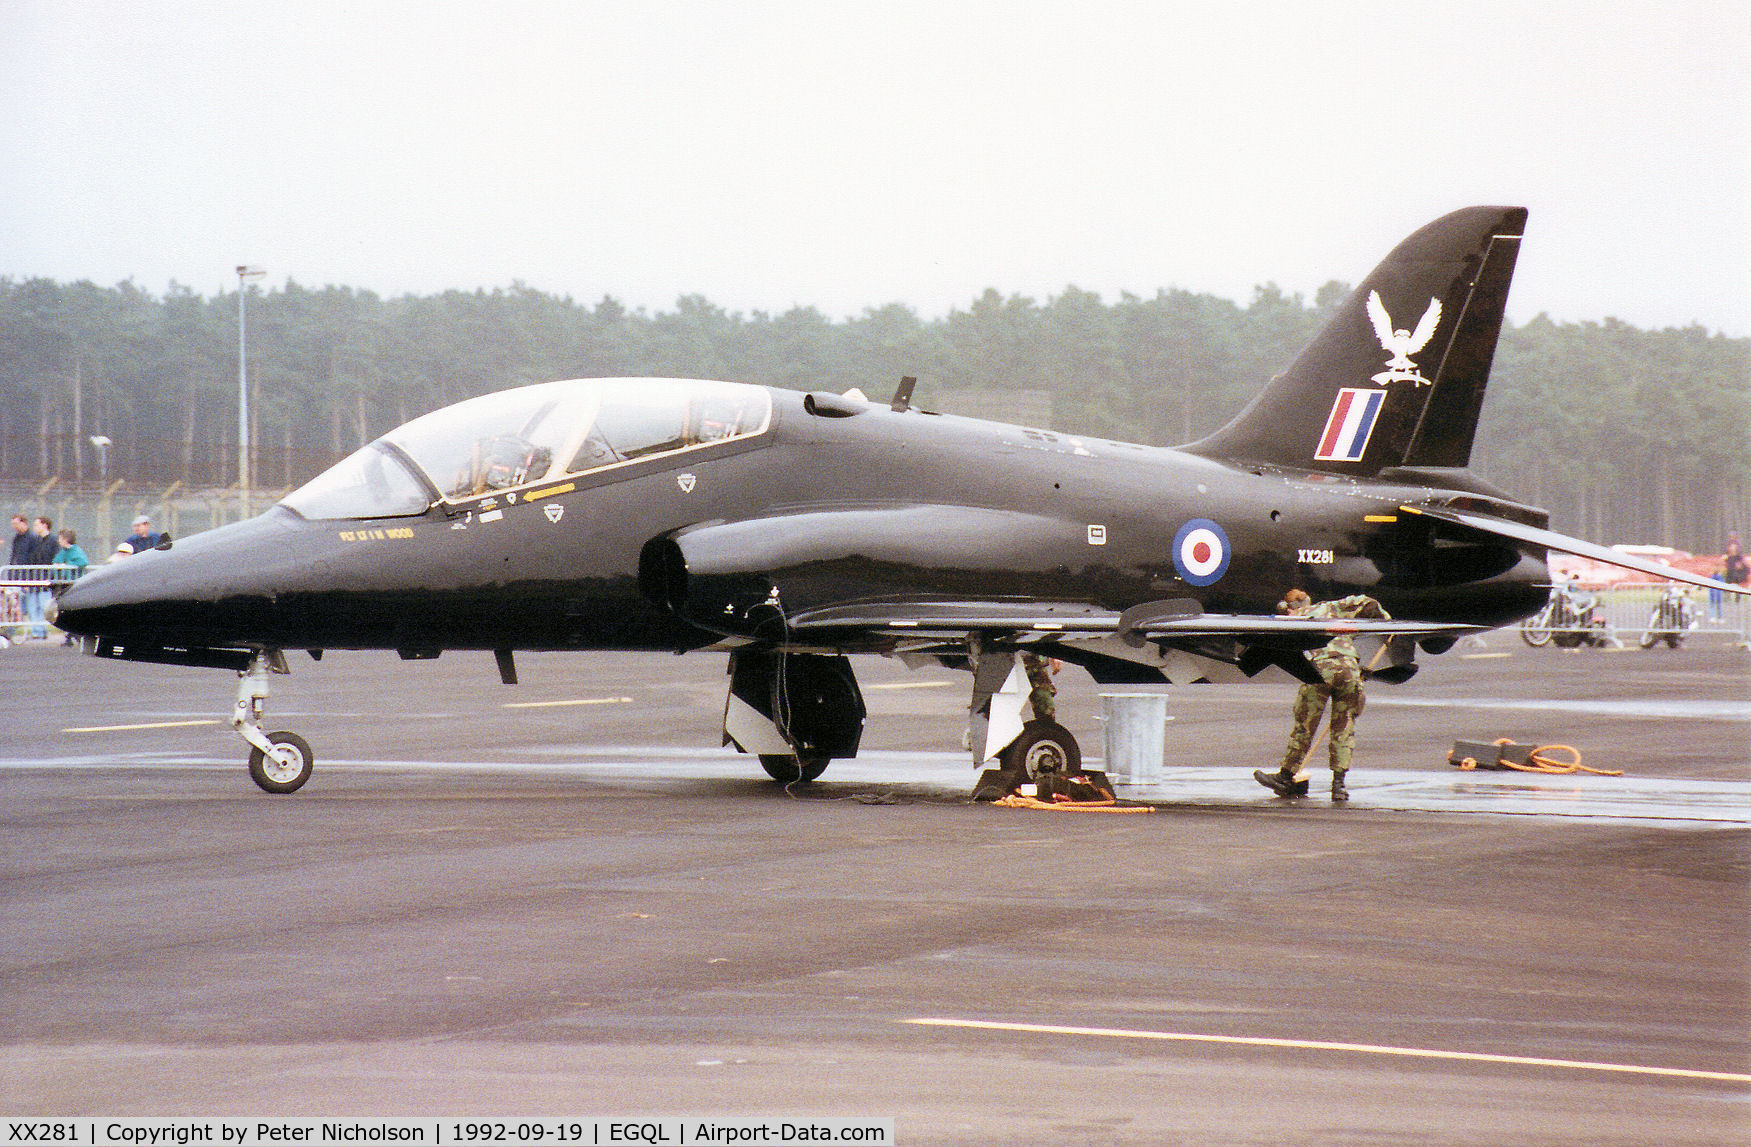 XX281, 1979 Hawker Siddeley Hawk T.1A C/N 106/312106, Hawk T.1A of 151 Squadron on display at the 1992 RAF Leuchars Airshow.